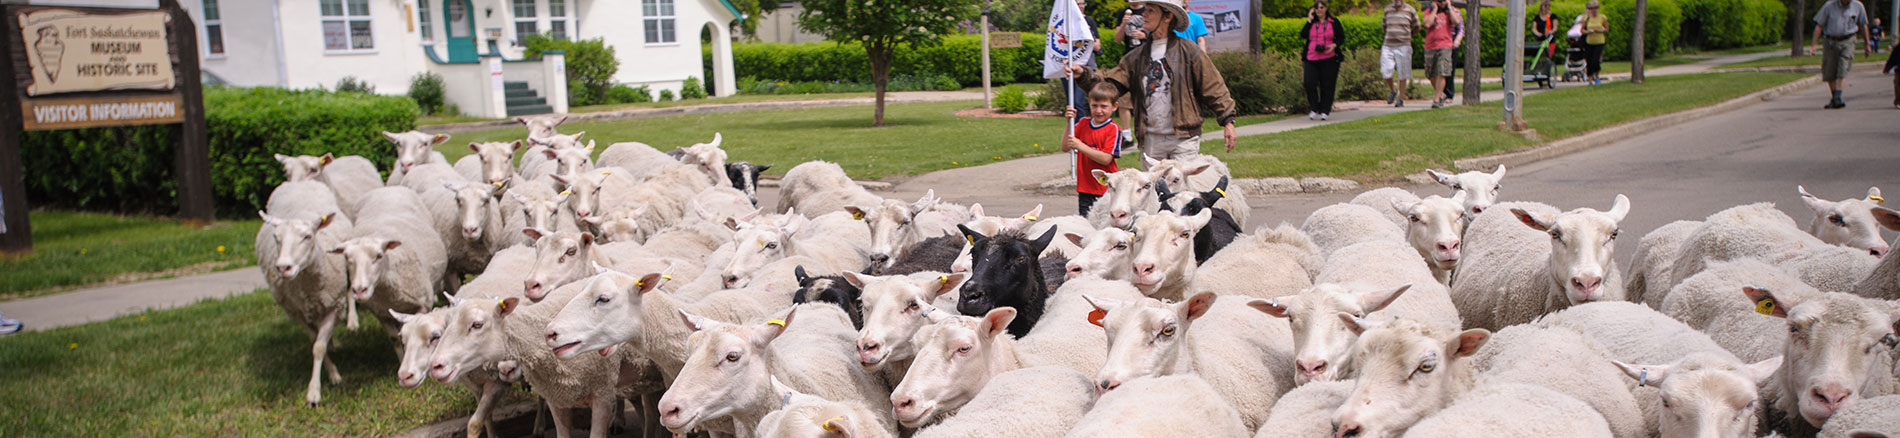 Fort Saskatchewan Family Festival and Sheep Arrival